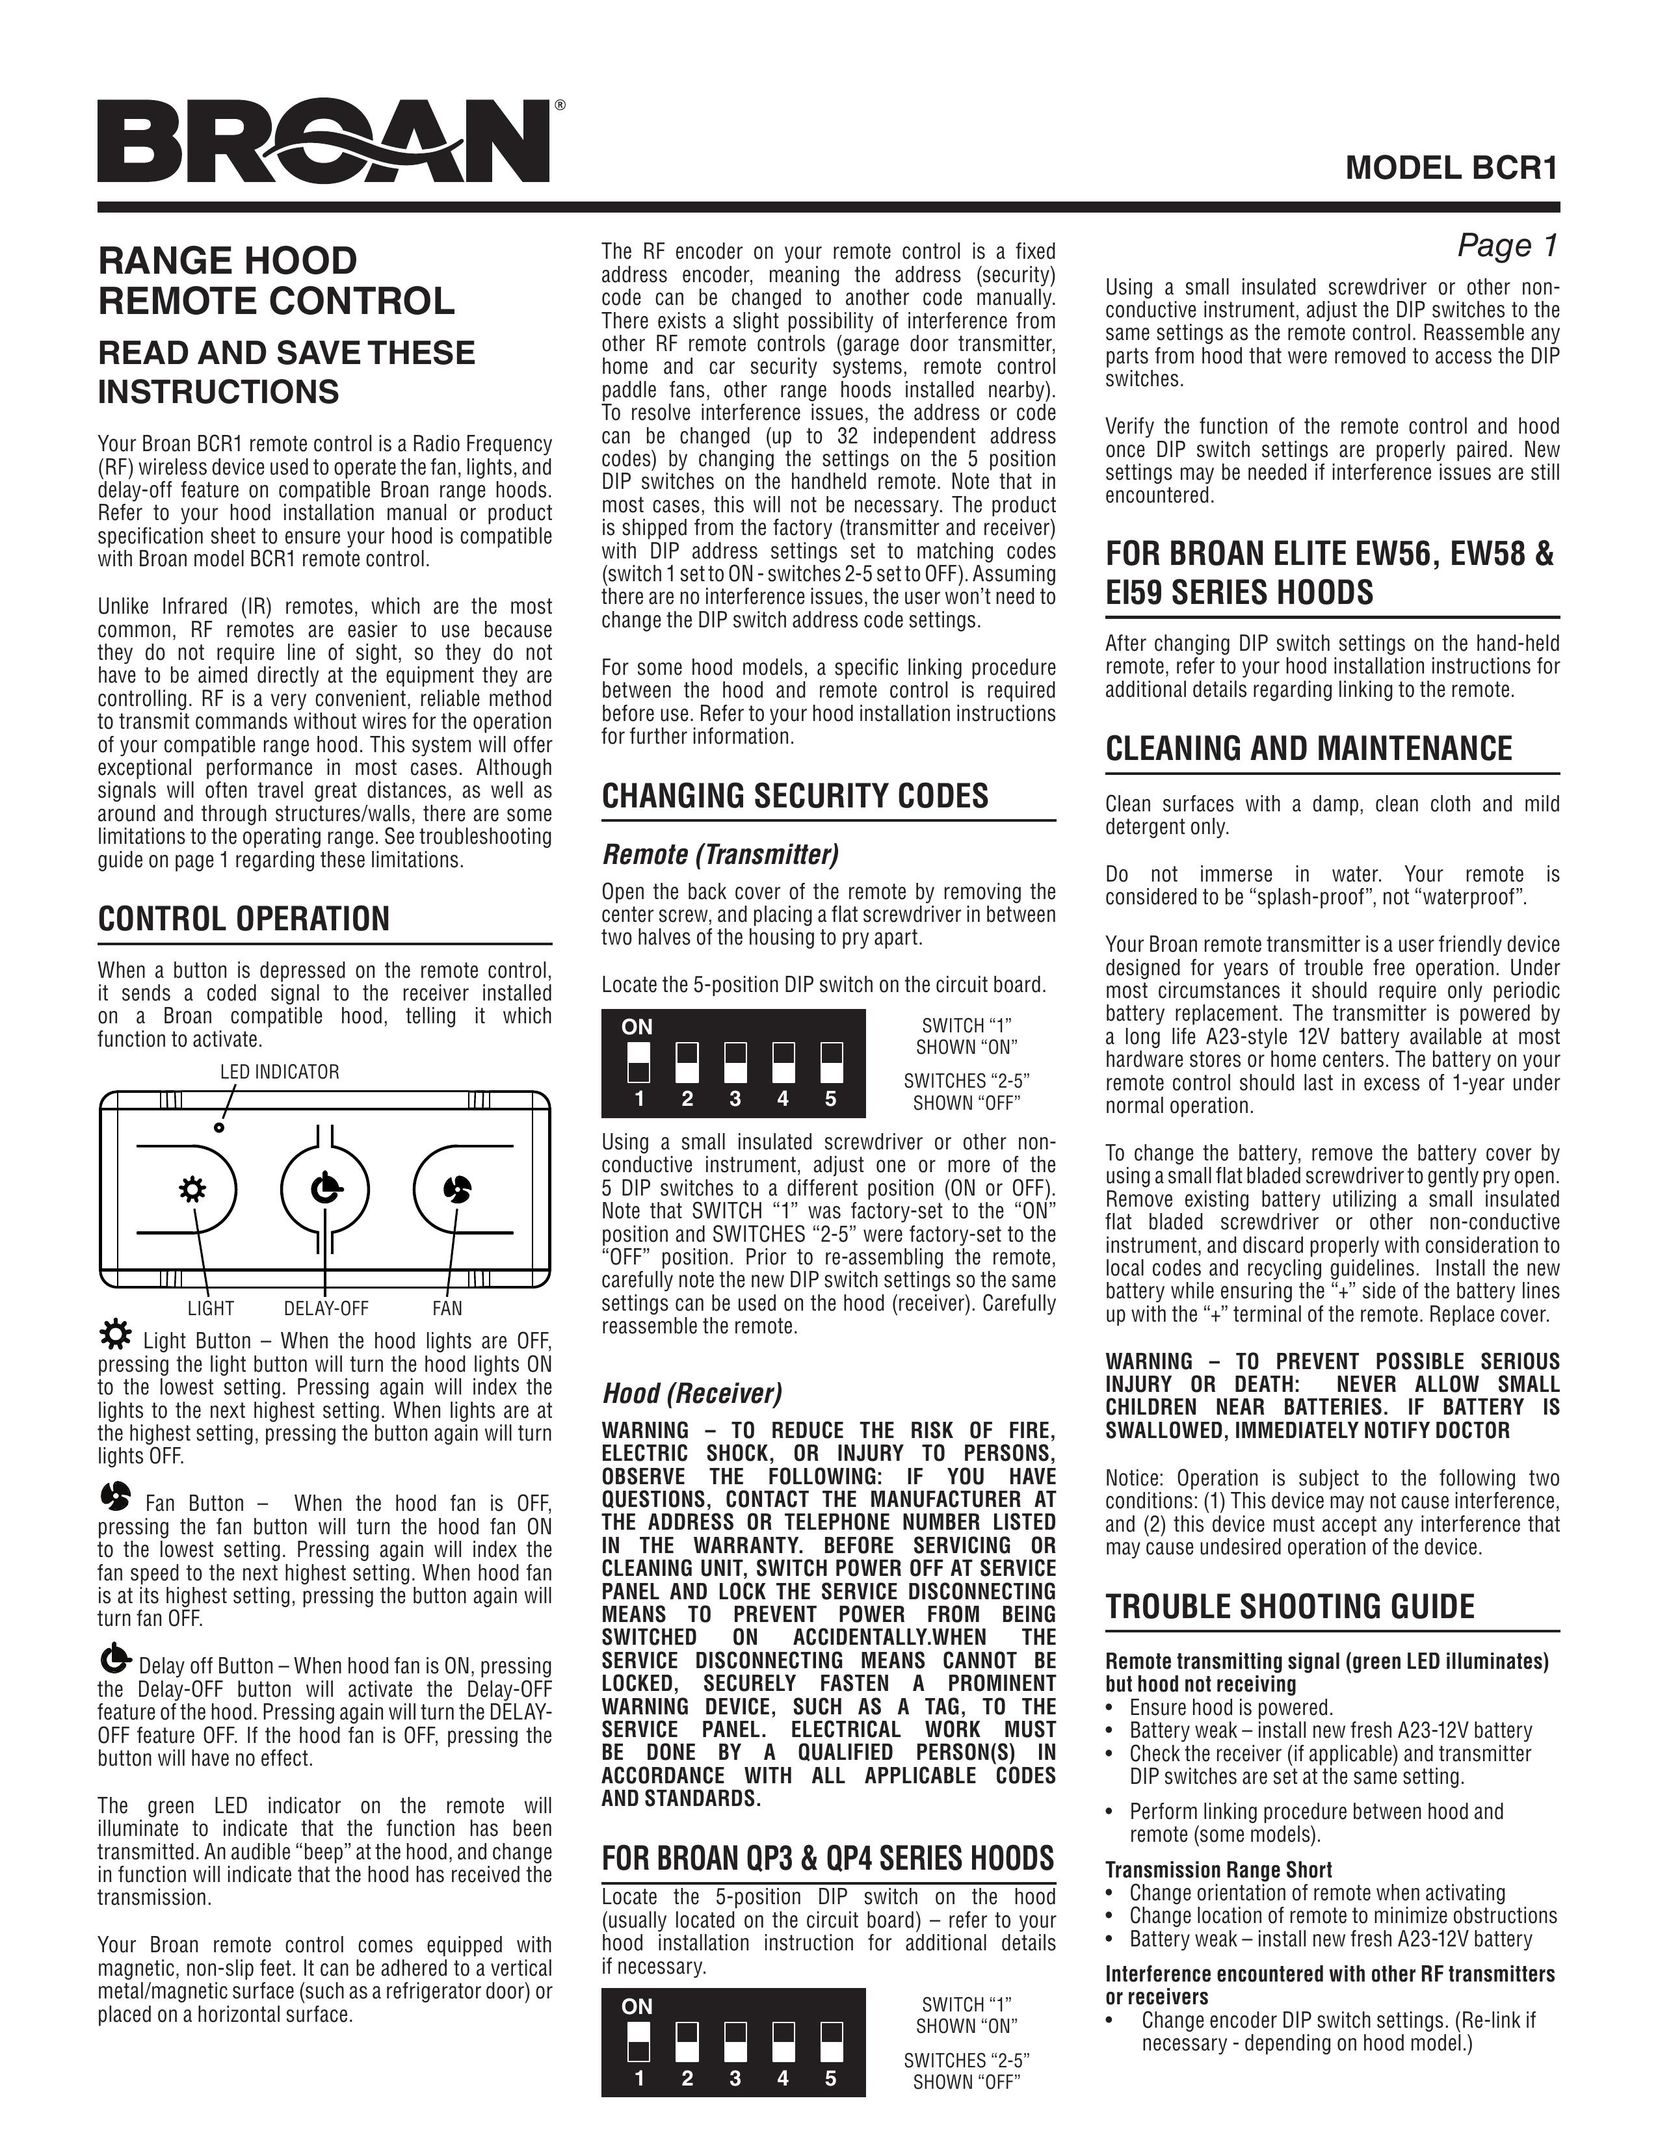 Broan BCR1 Universal Remote User Manual